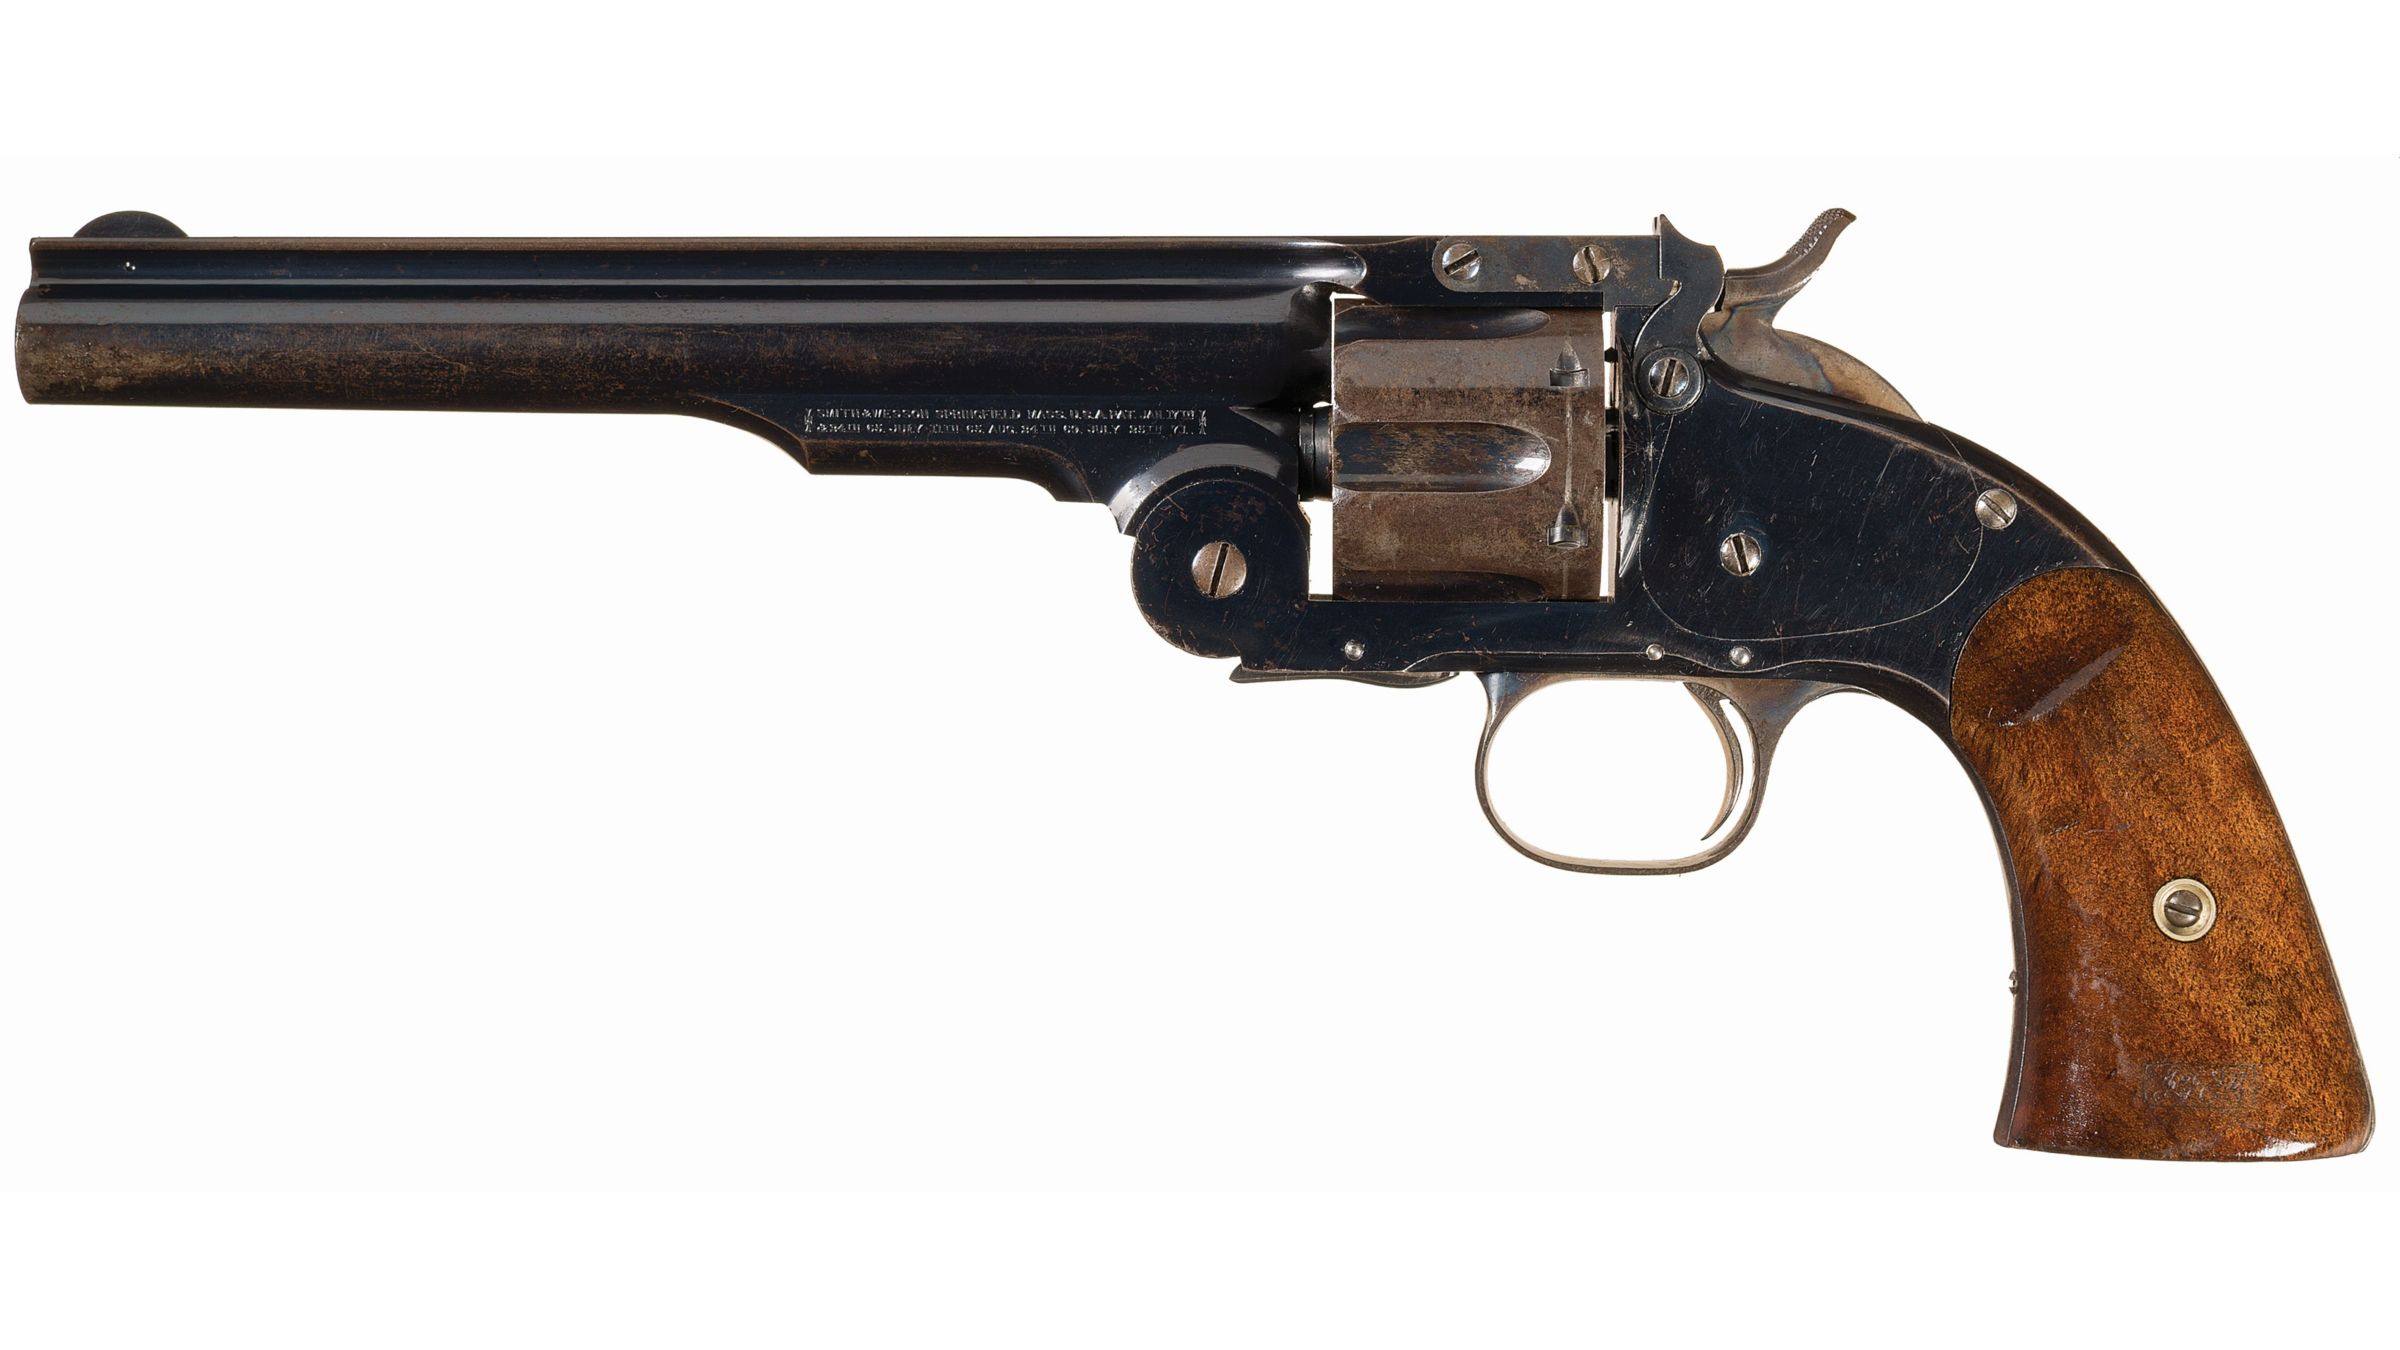 Unforgiven” 30 years: the Smith & Wesson Schofield 1875 revolver